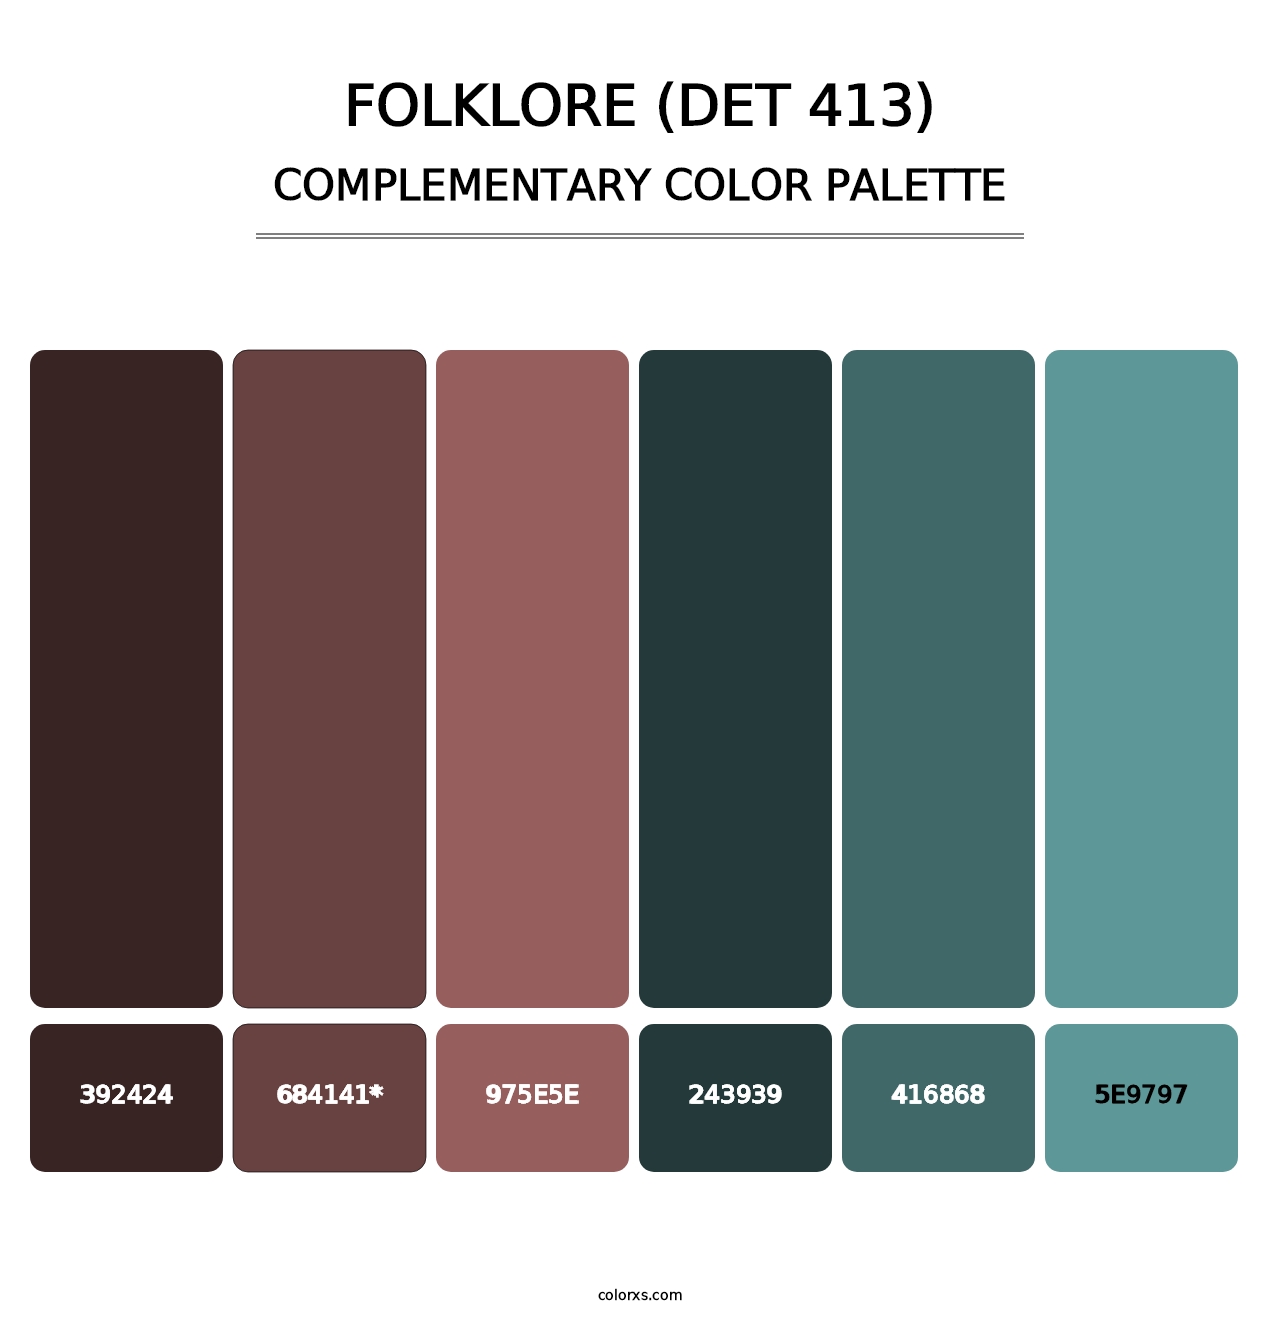 Folklore (DET 413) - Complementary Color Palette